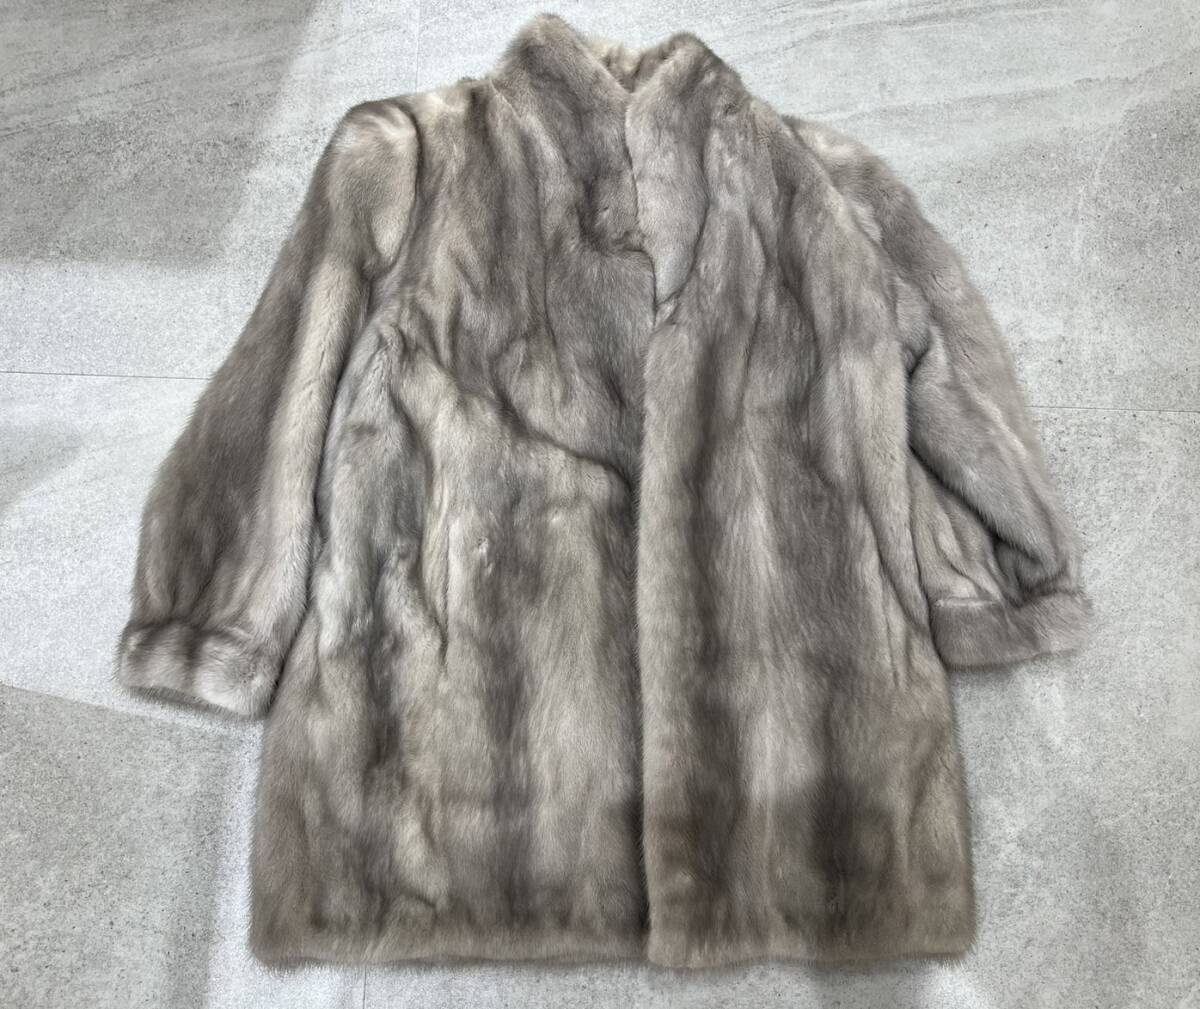 【OMO52YB】ミンクコート ノーブランド 高級 毛皮 グレー系 着丈約82cm レディース 婦人用 防寒 アウター ファッション 中古 長期保管品の画像1